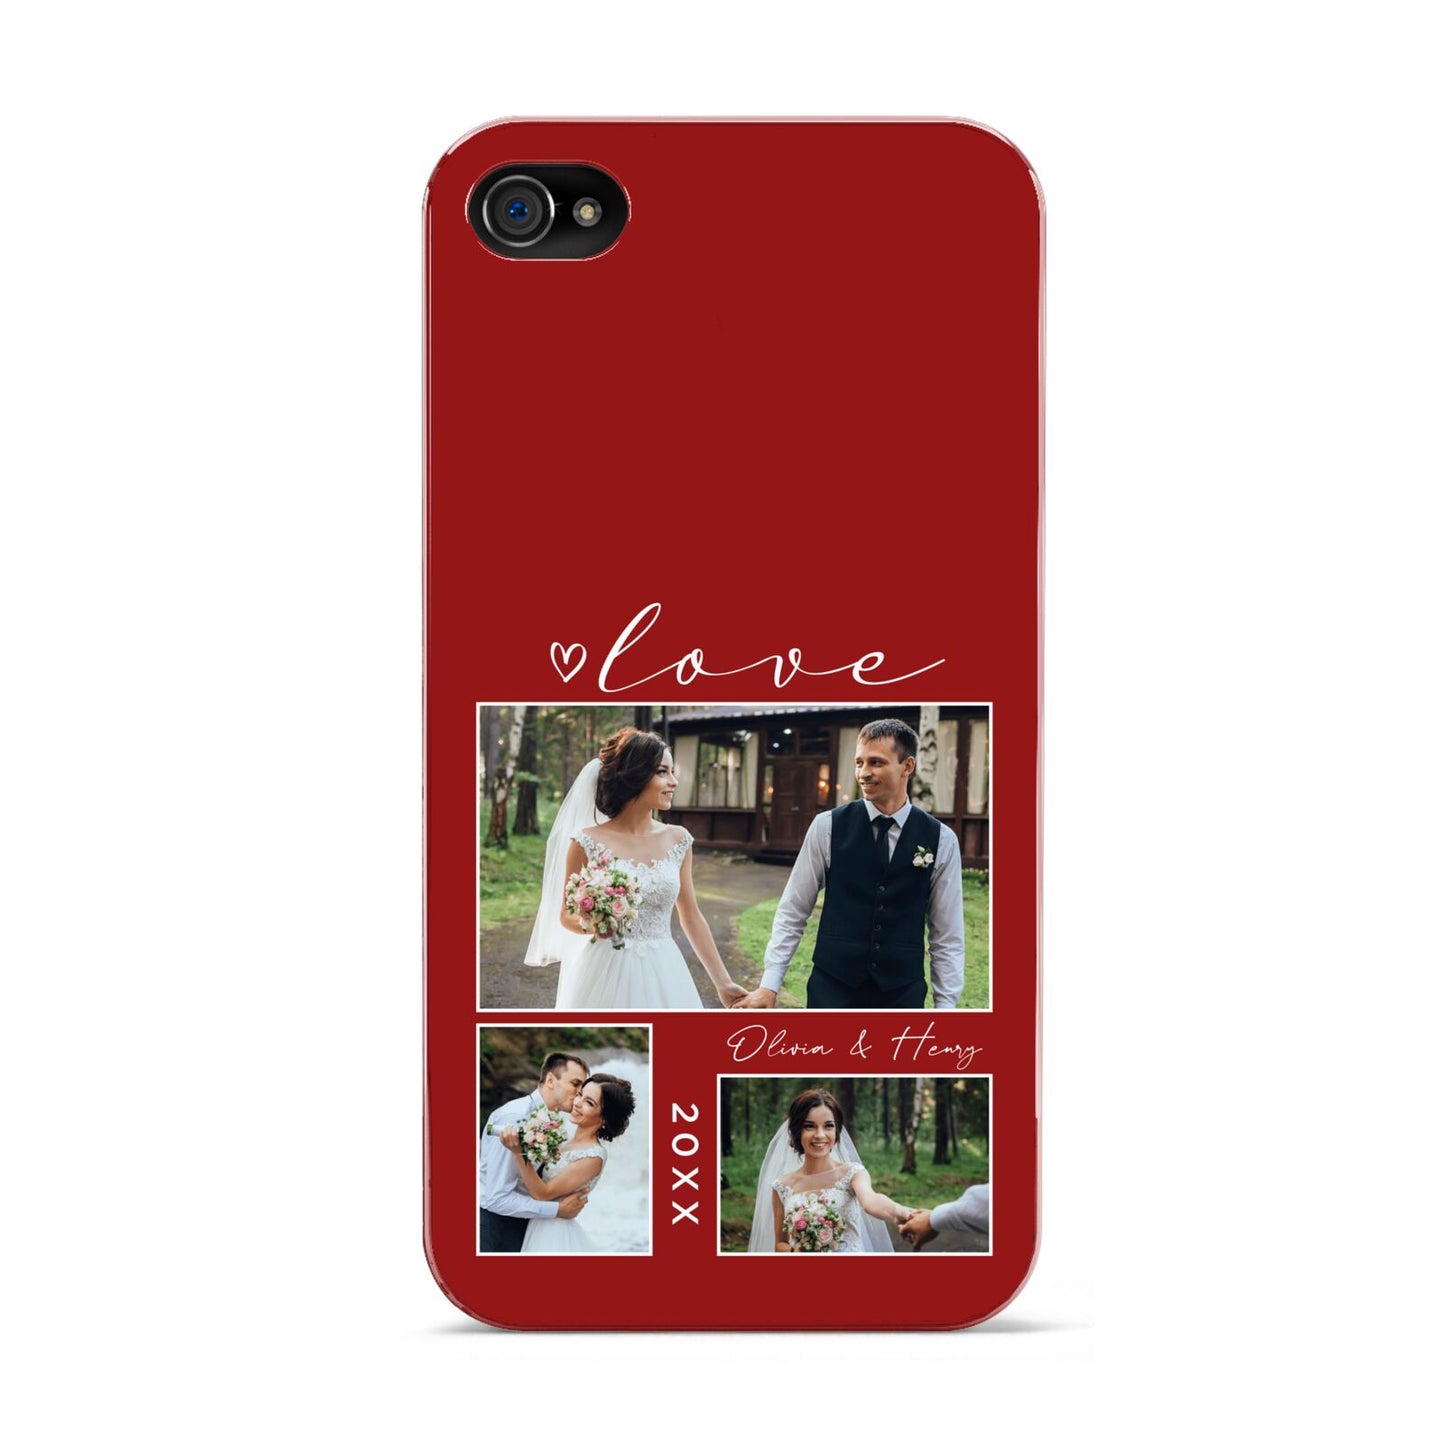 Valentine Wedding Photo Personalised Apple iPhone 4s Case